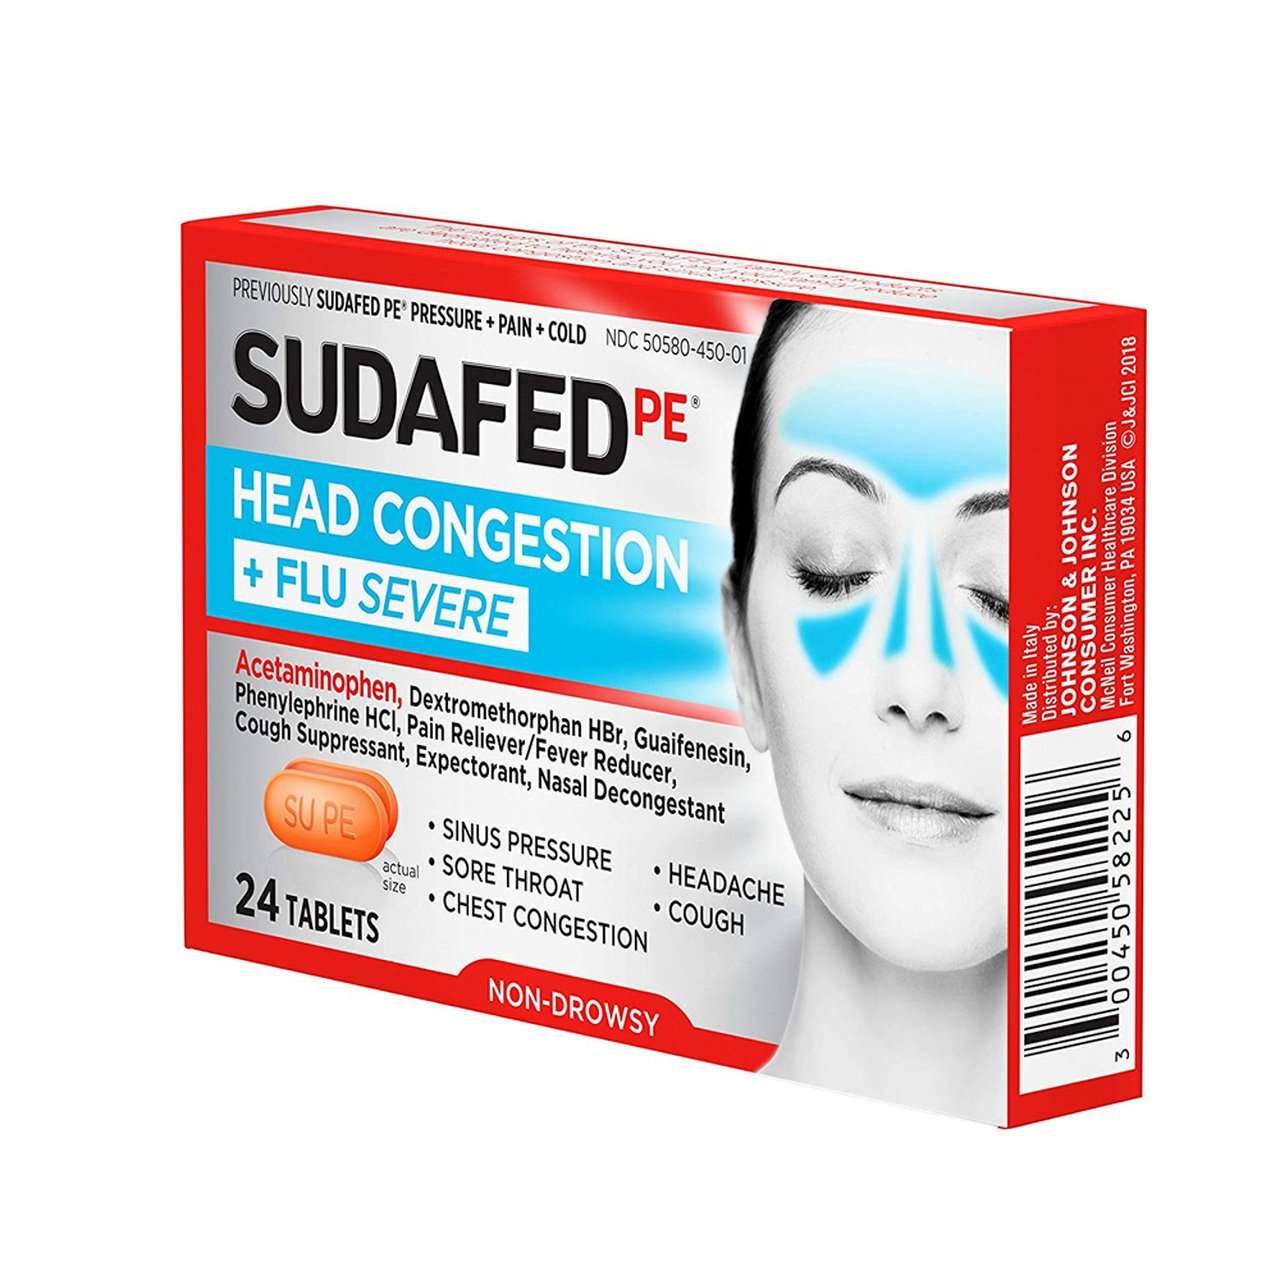 Sudafed Head Congestion + Flu Severe